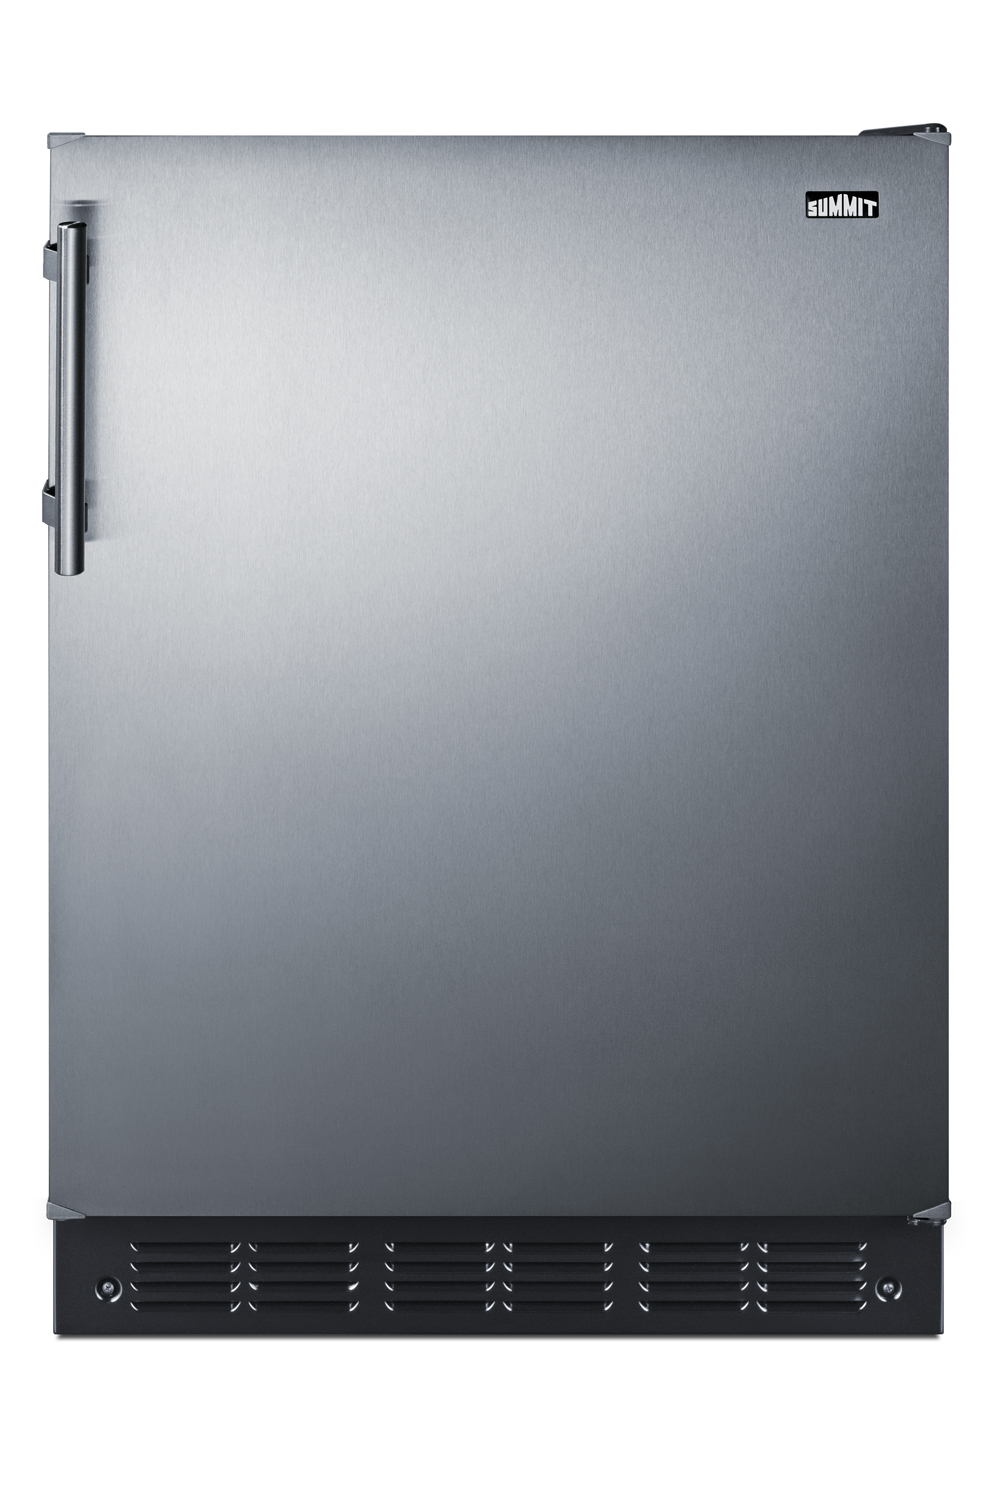 Summit 24" Wide Refrigerator-Freezer, ADA Compliant